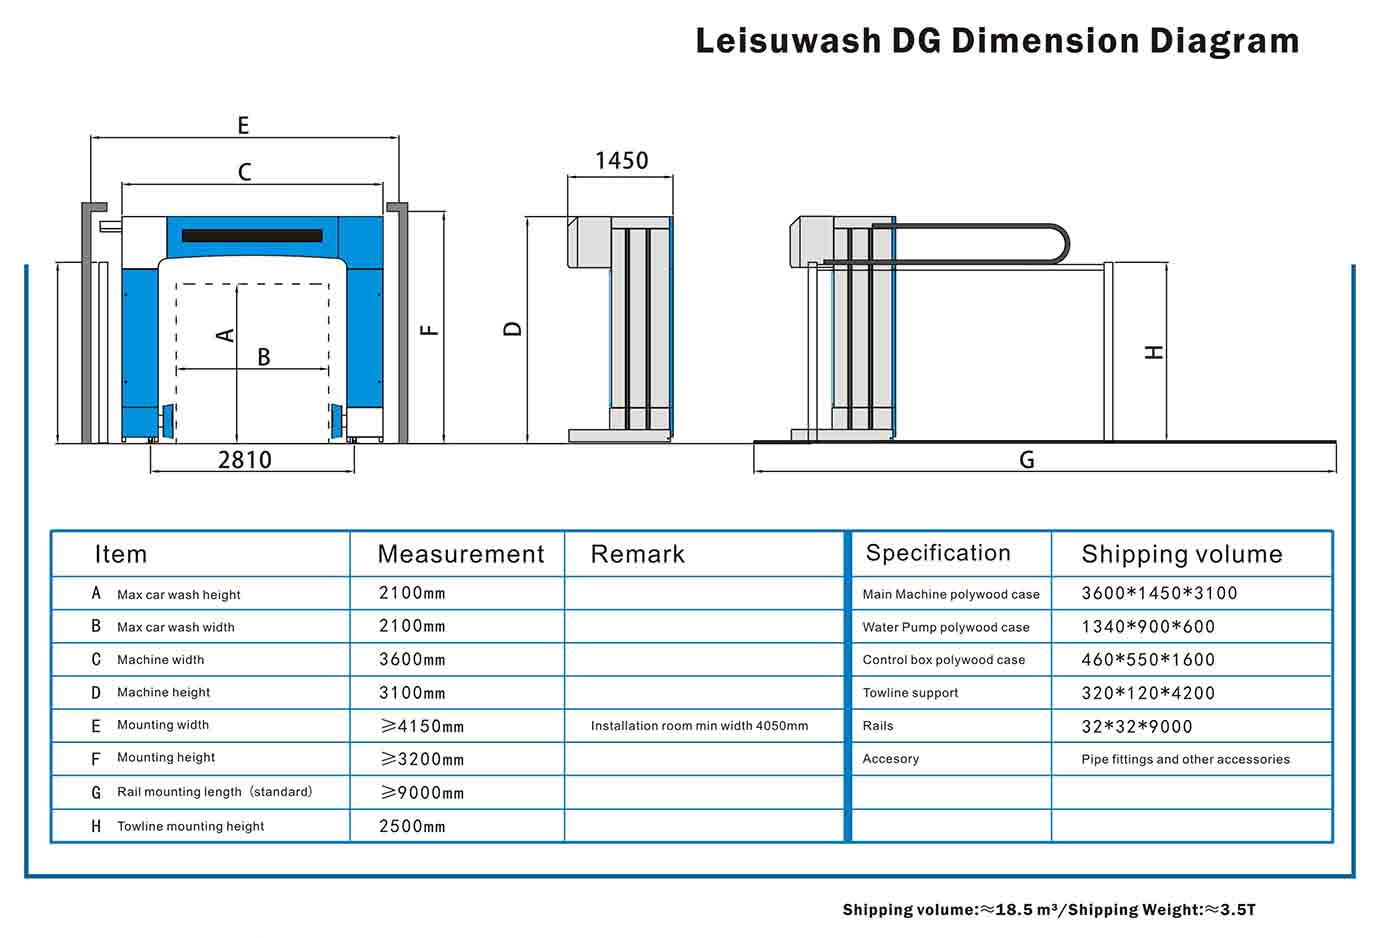 Leisuwash DG Technical Parameters